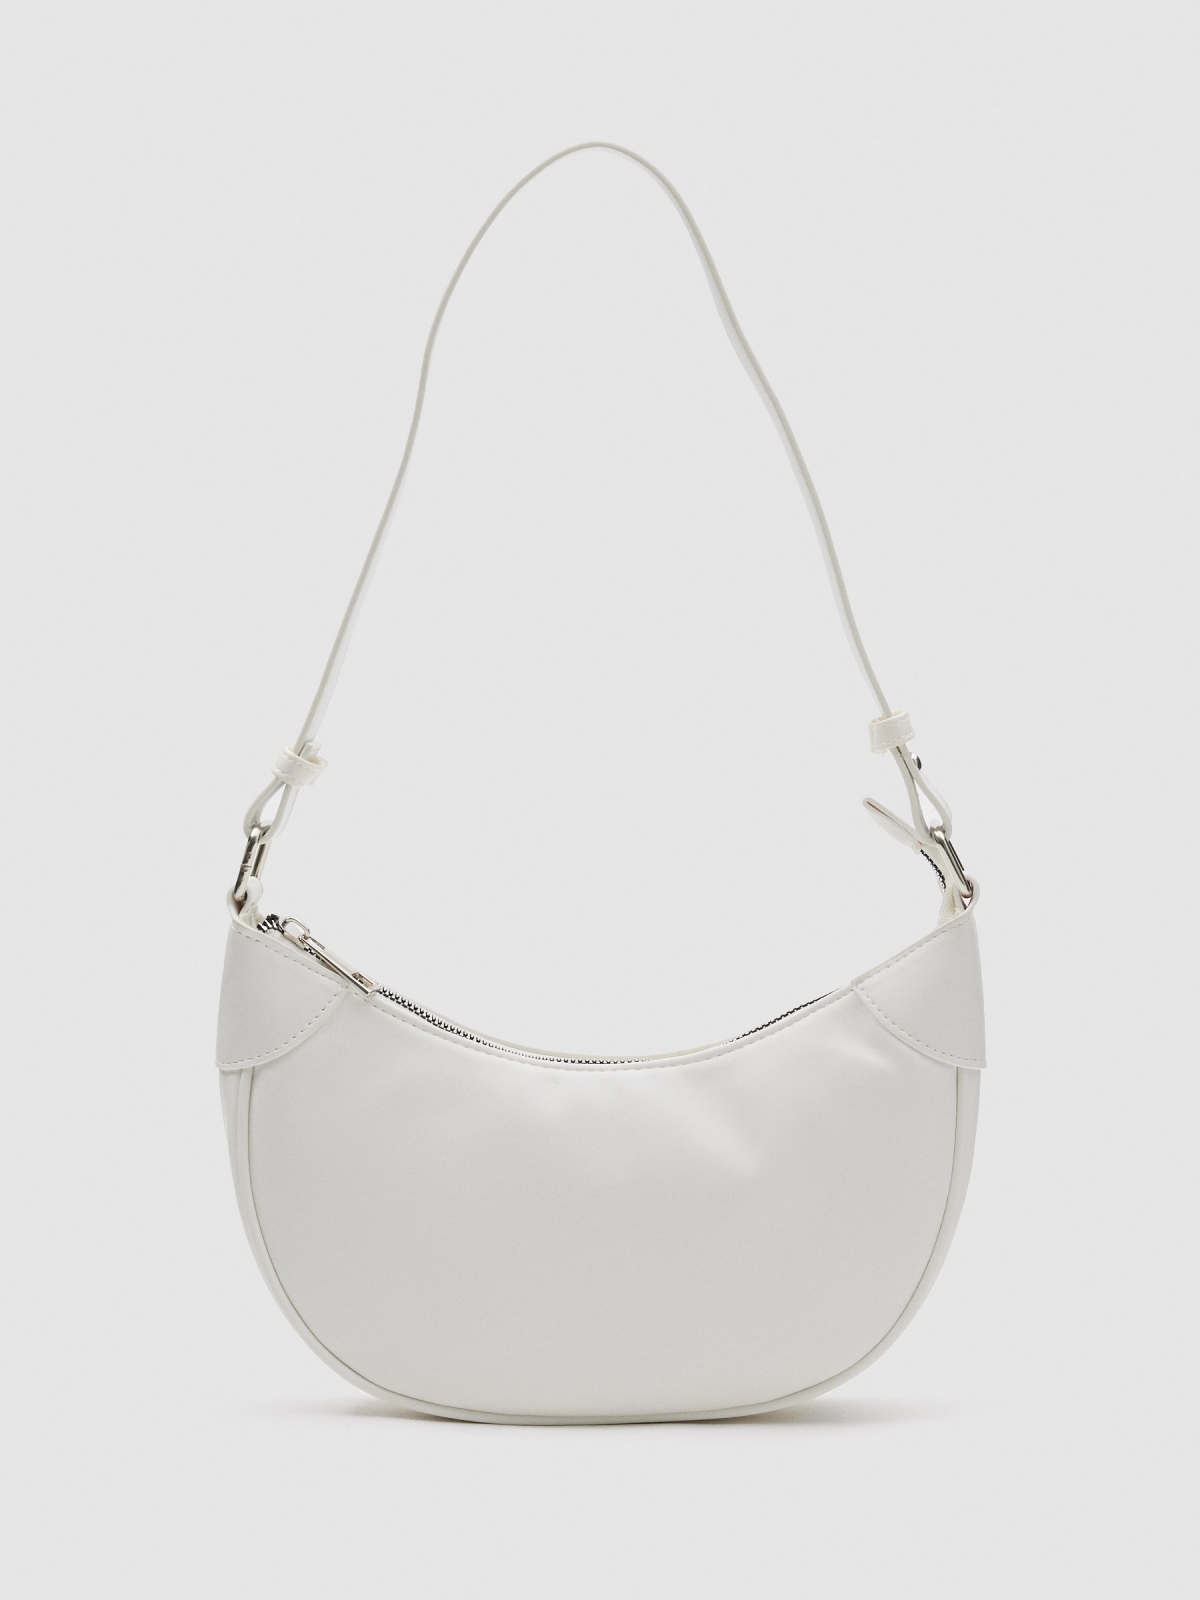 Half moon leatherette bag white